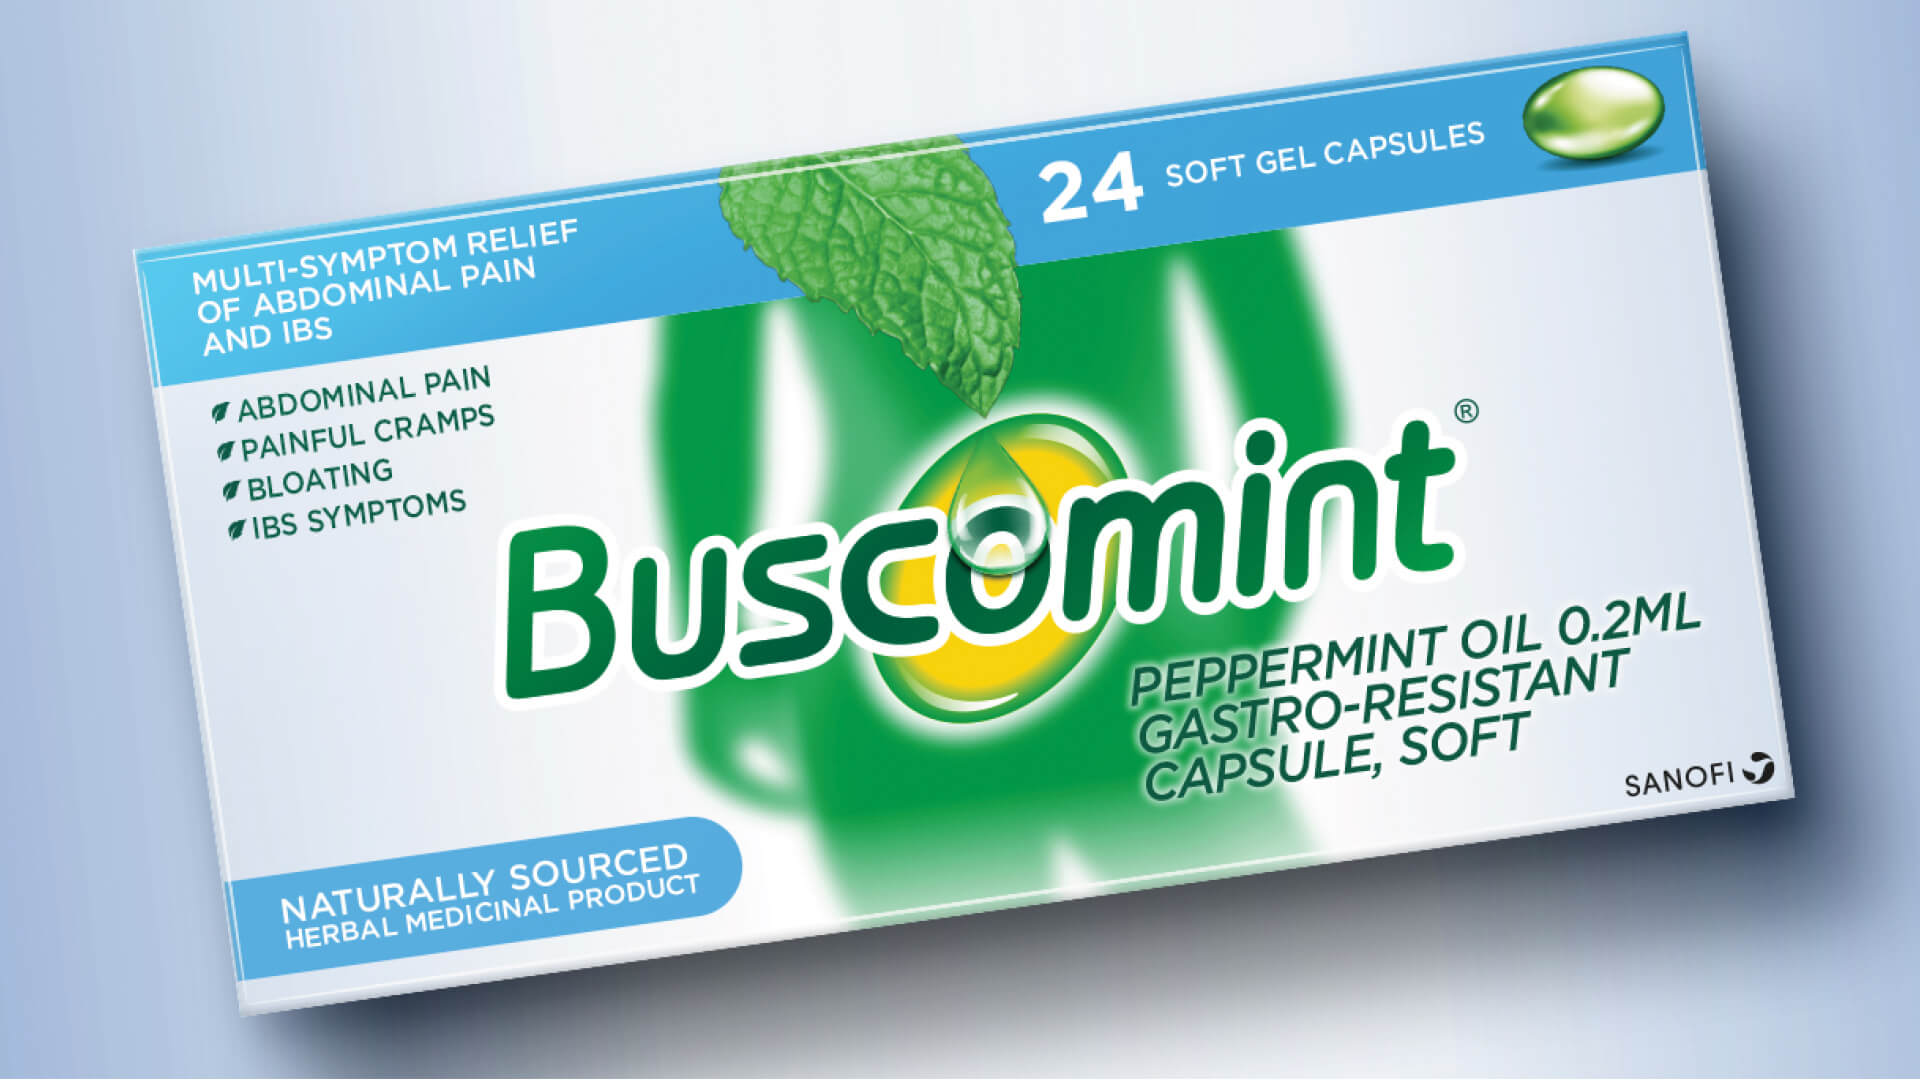 Buscopan Packaging Design